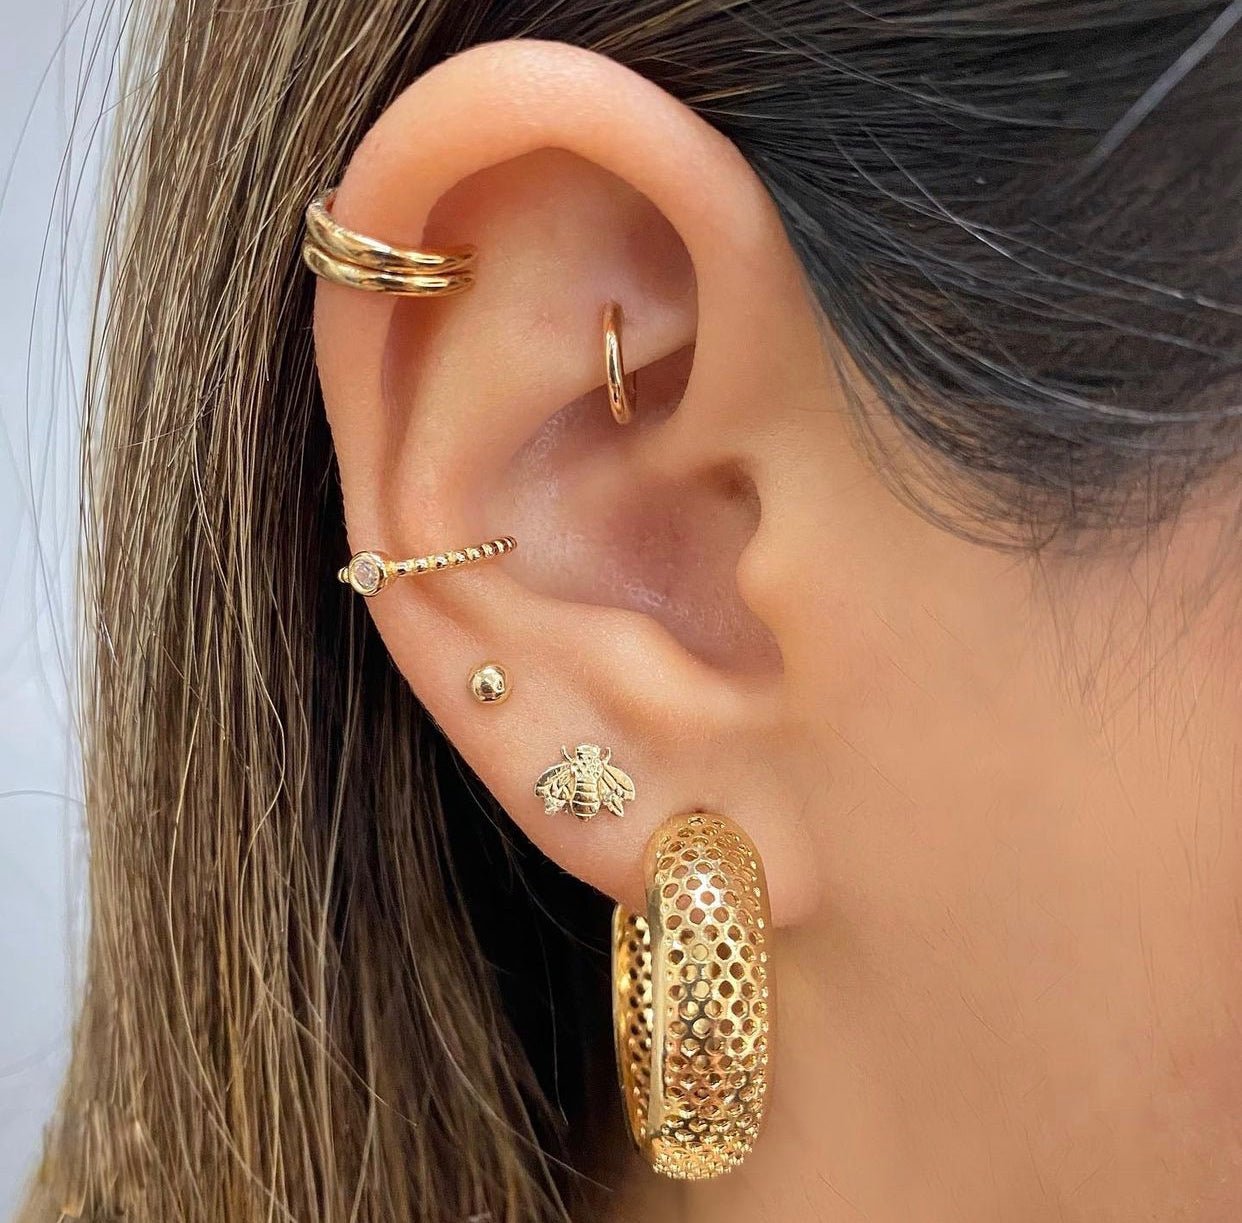 Ear Cuff With Pave Stone - Lulu Ave Body Jewelery